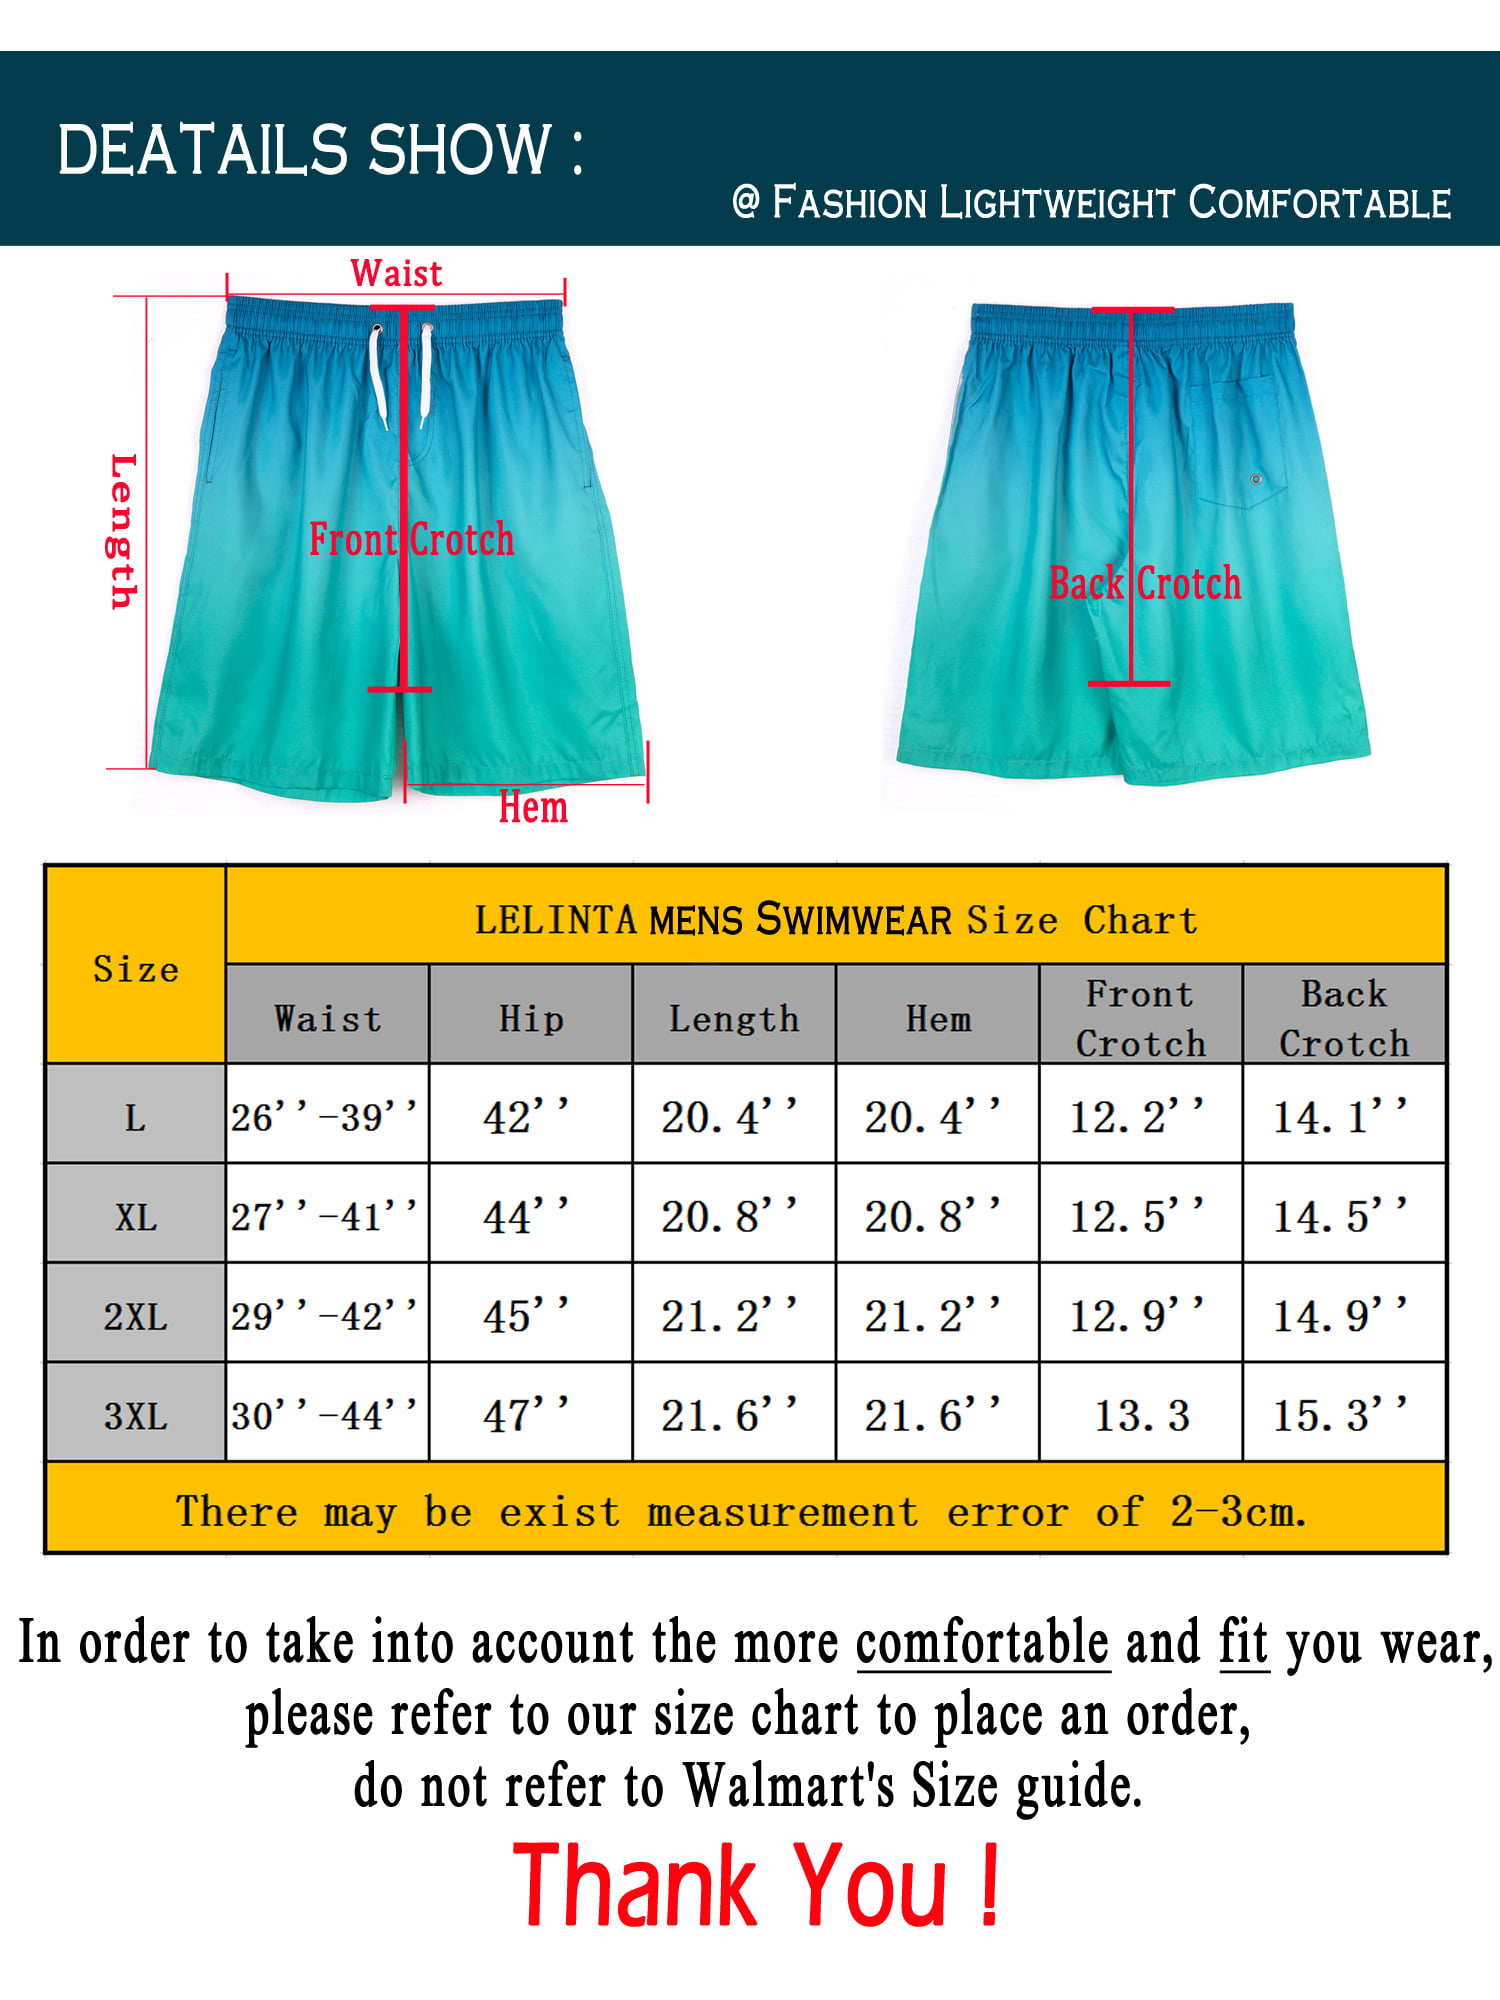 Walmart Mens Pants Size Chart